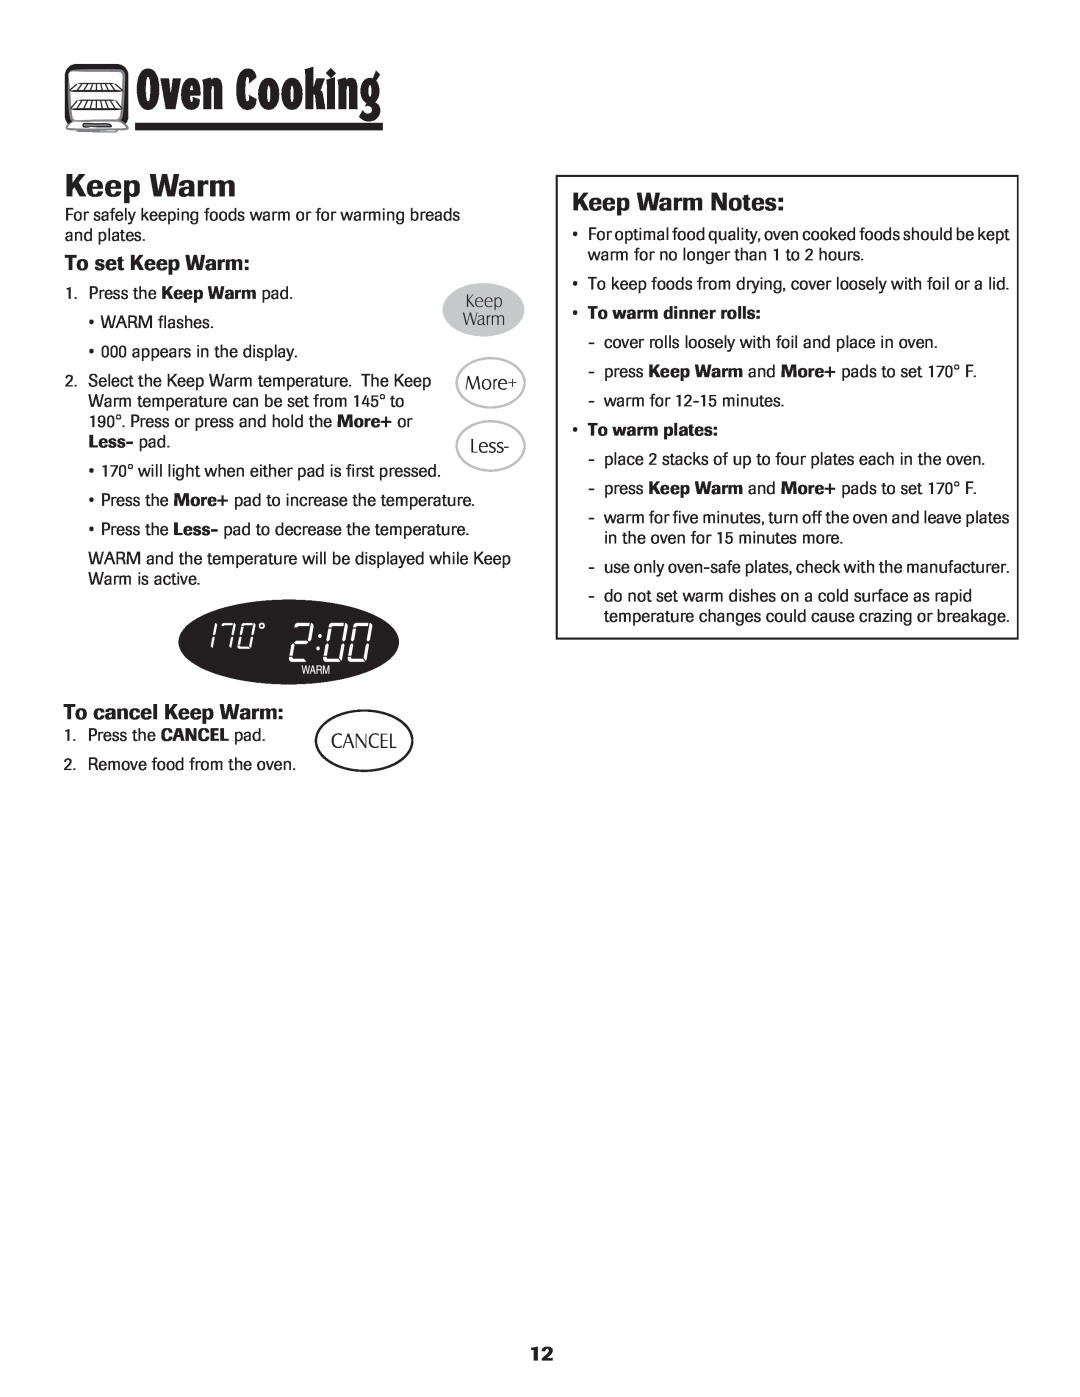 Maytag MGR5775QDW manual Keep Warm Notes, To set Keep Warm, To cancel Keep Warm, Oven Cooking 